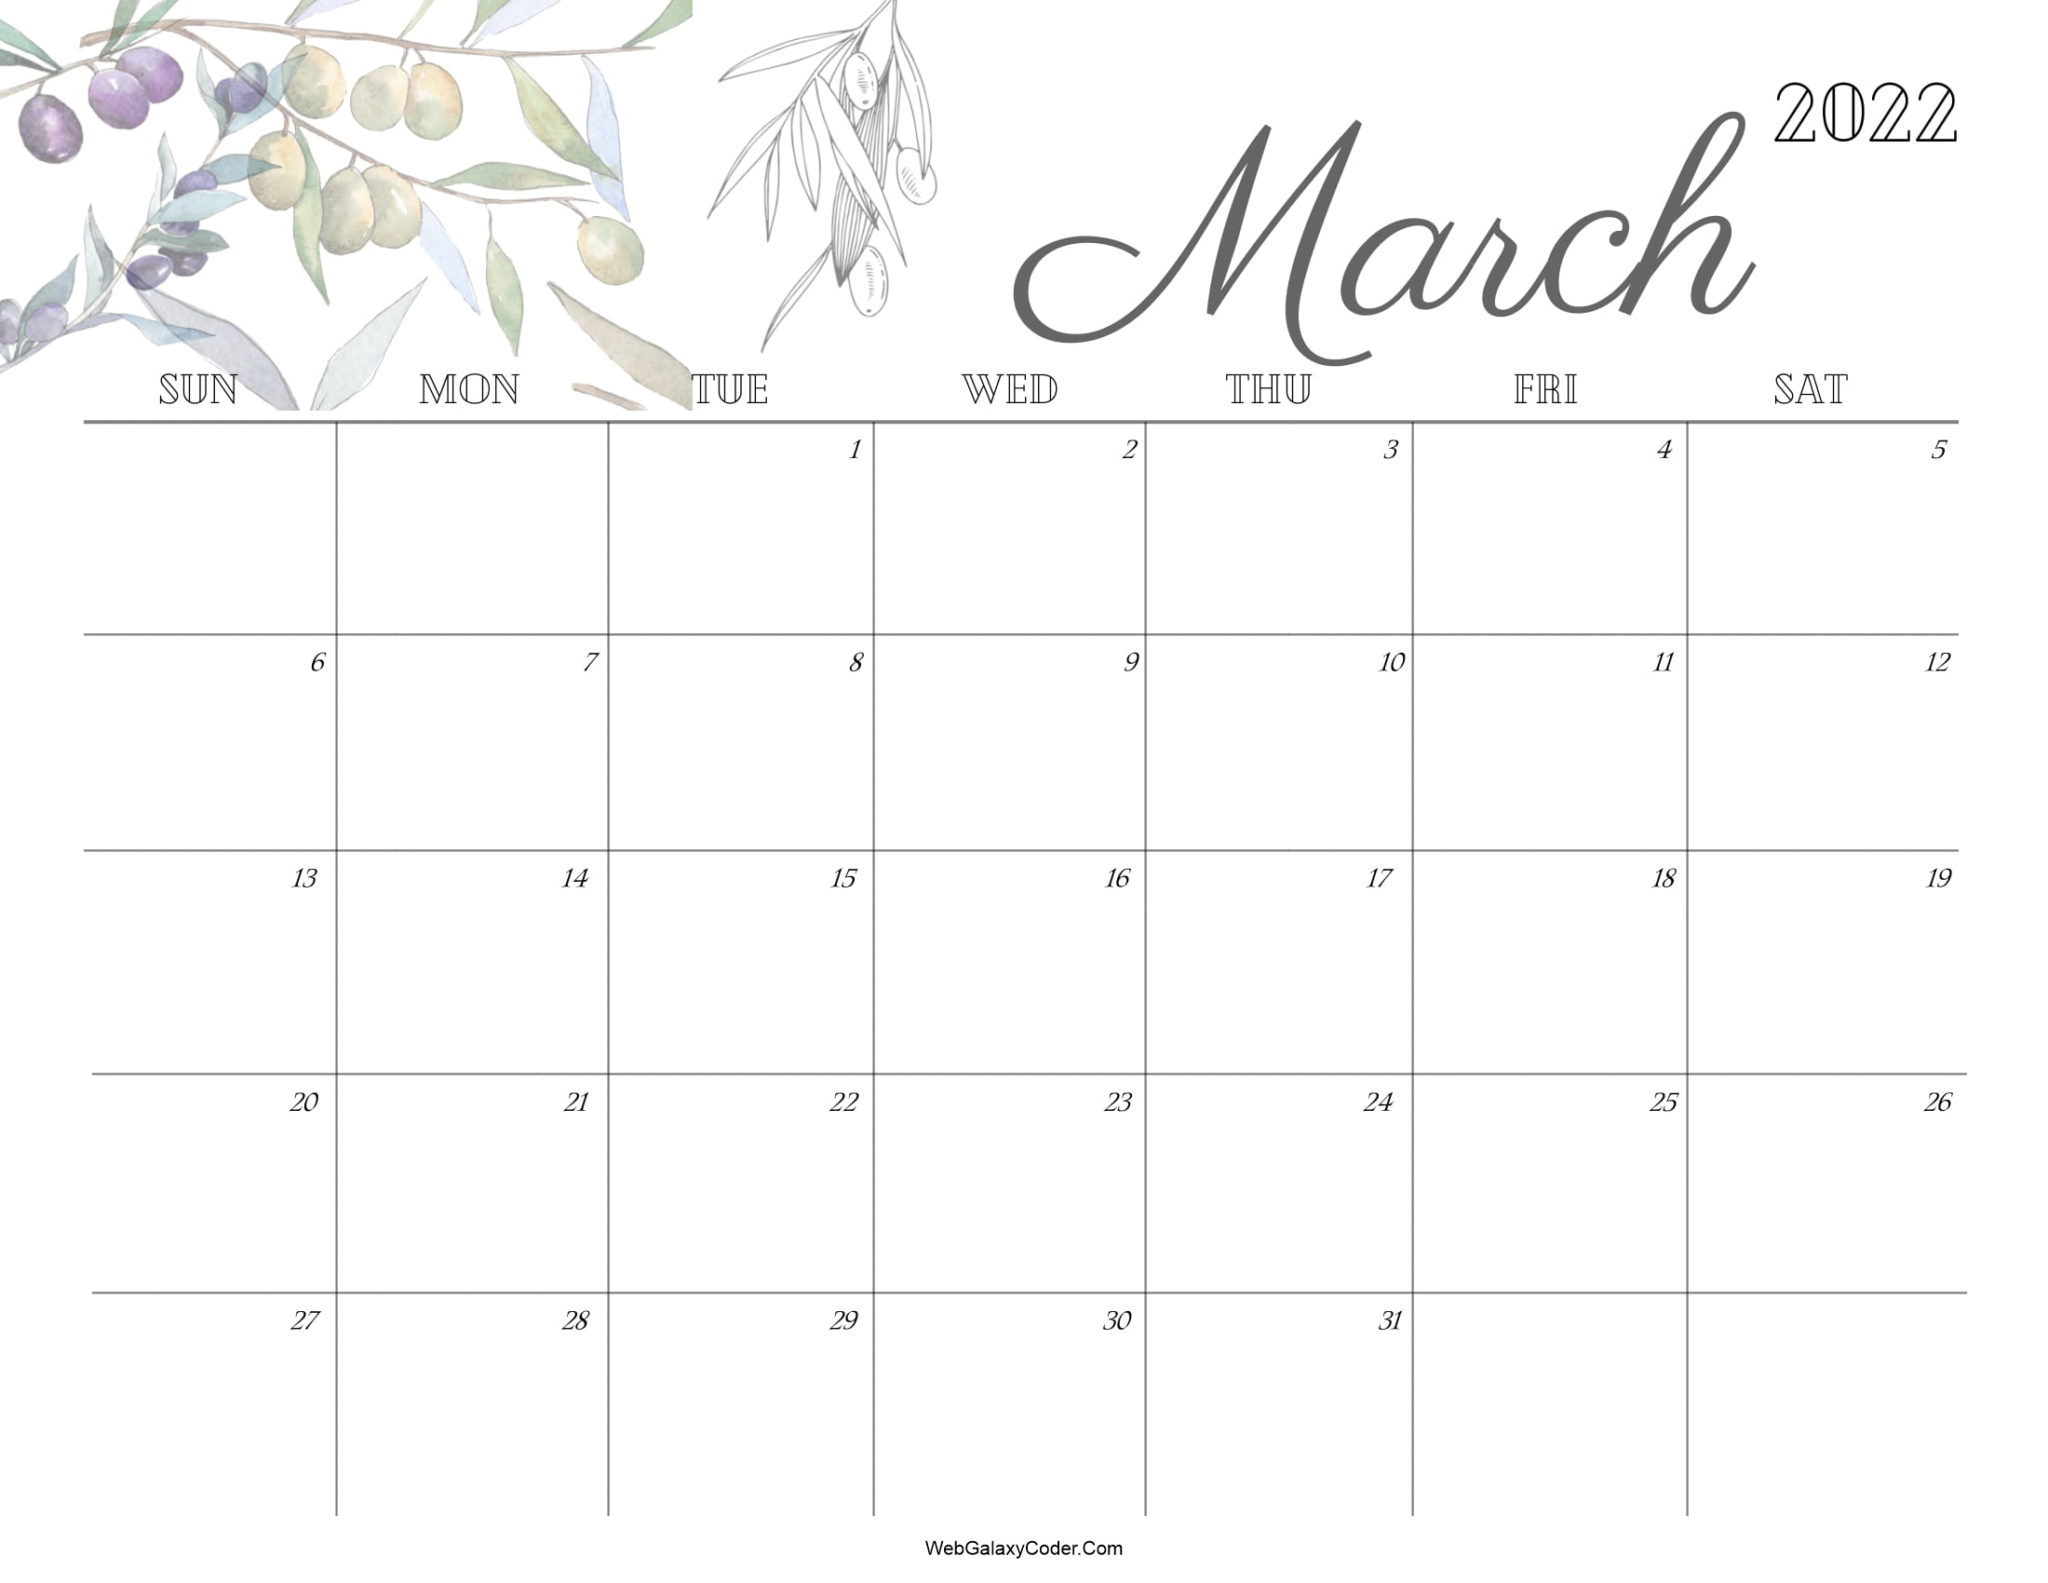 Catch March 2022 Tithi Calendar